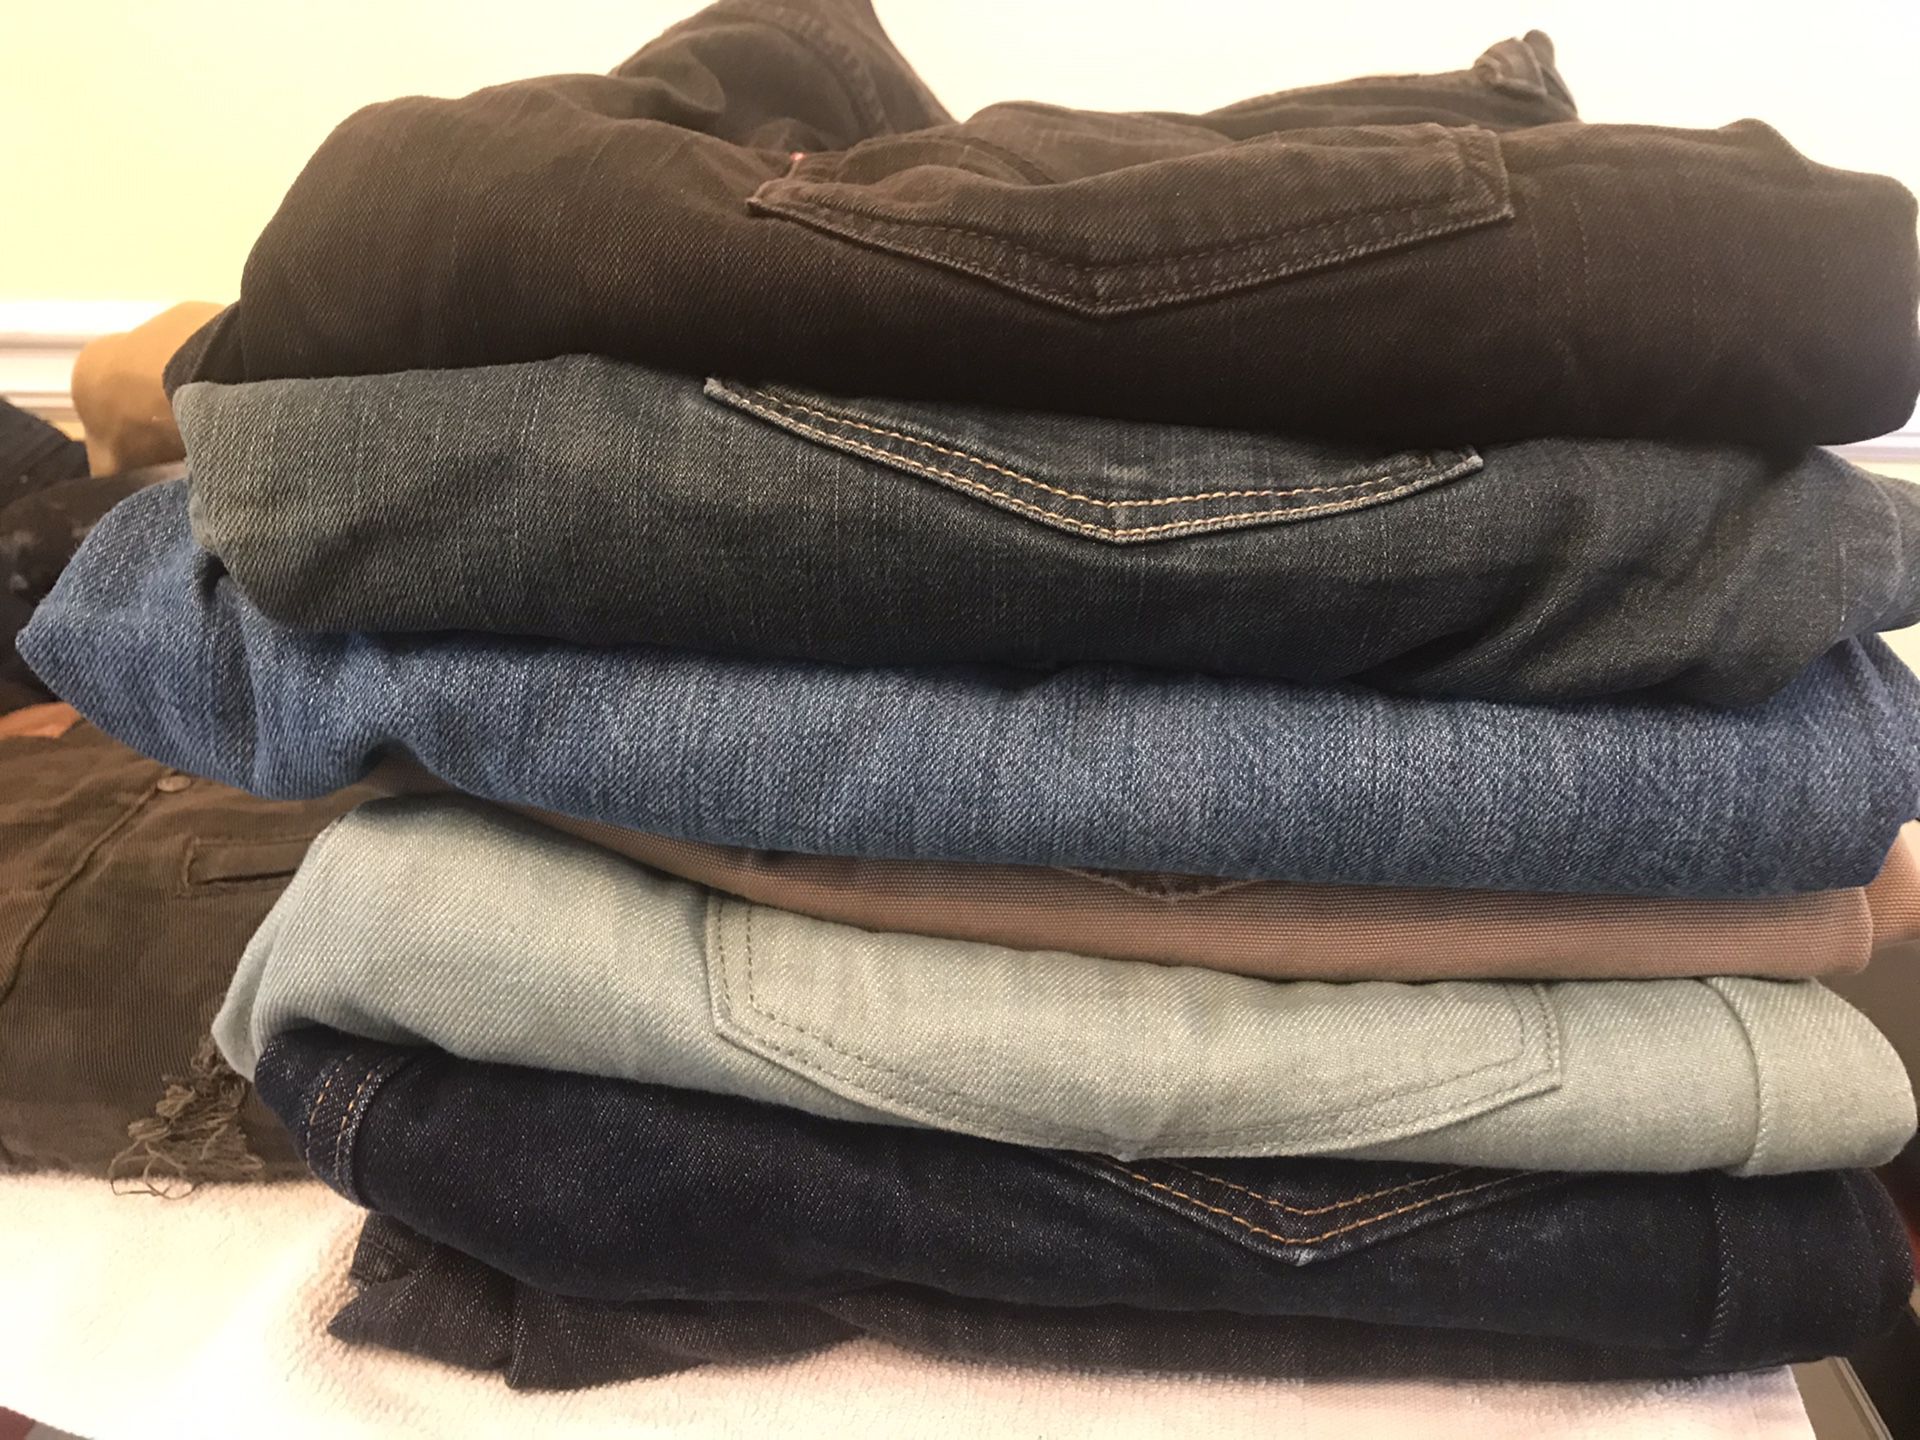 Jeans, Pants, denim, shirts, polos, leather bags